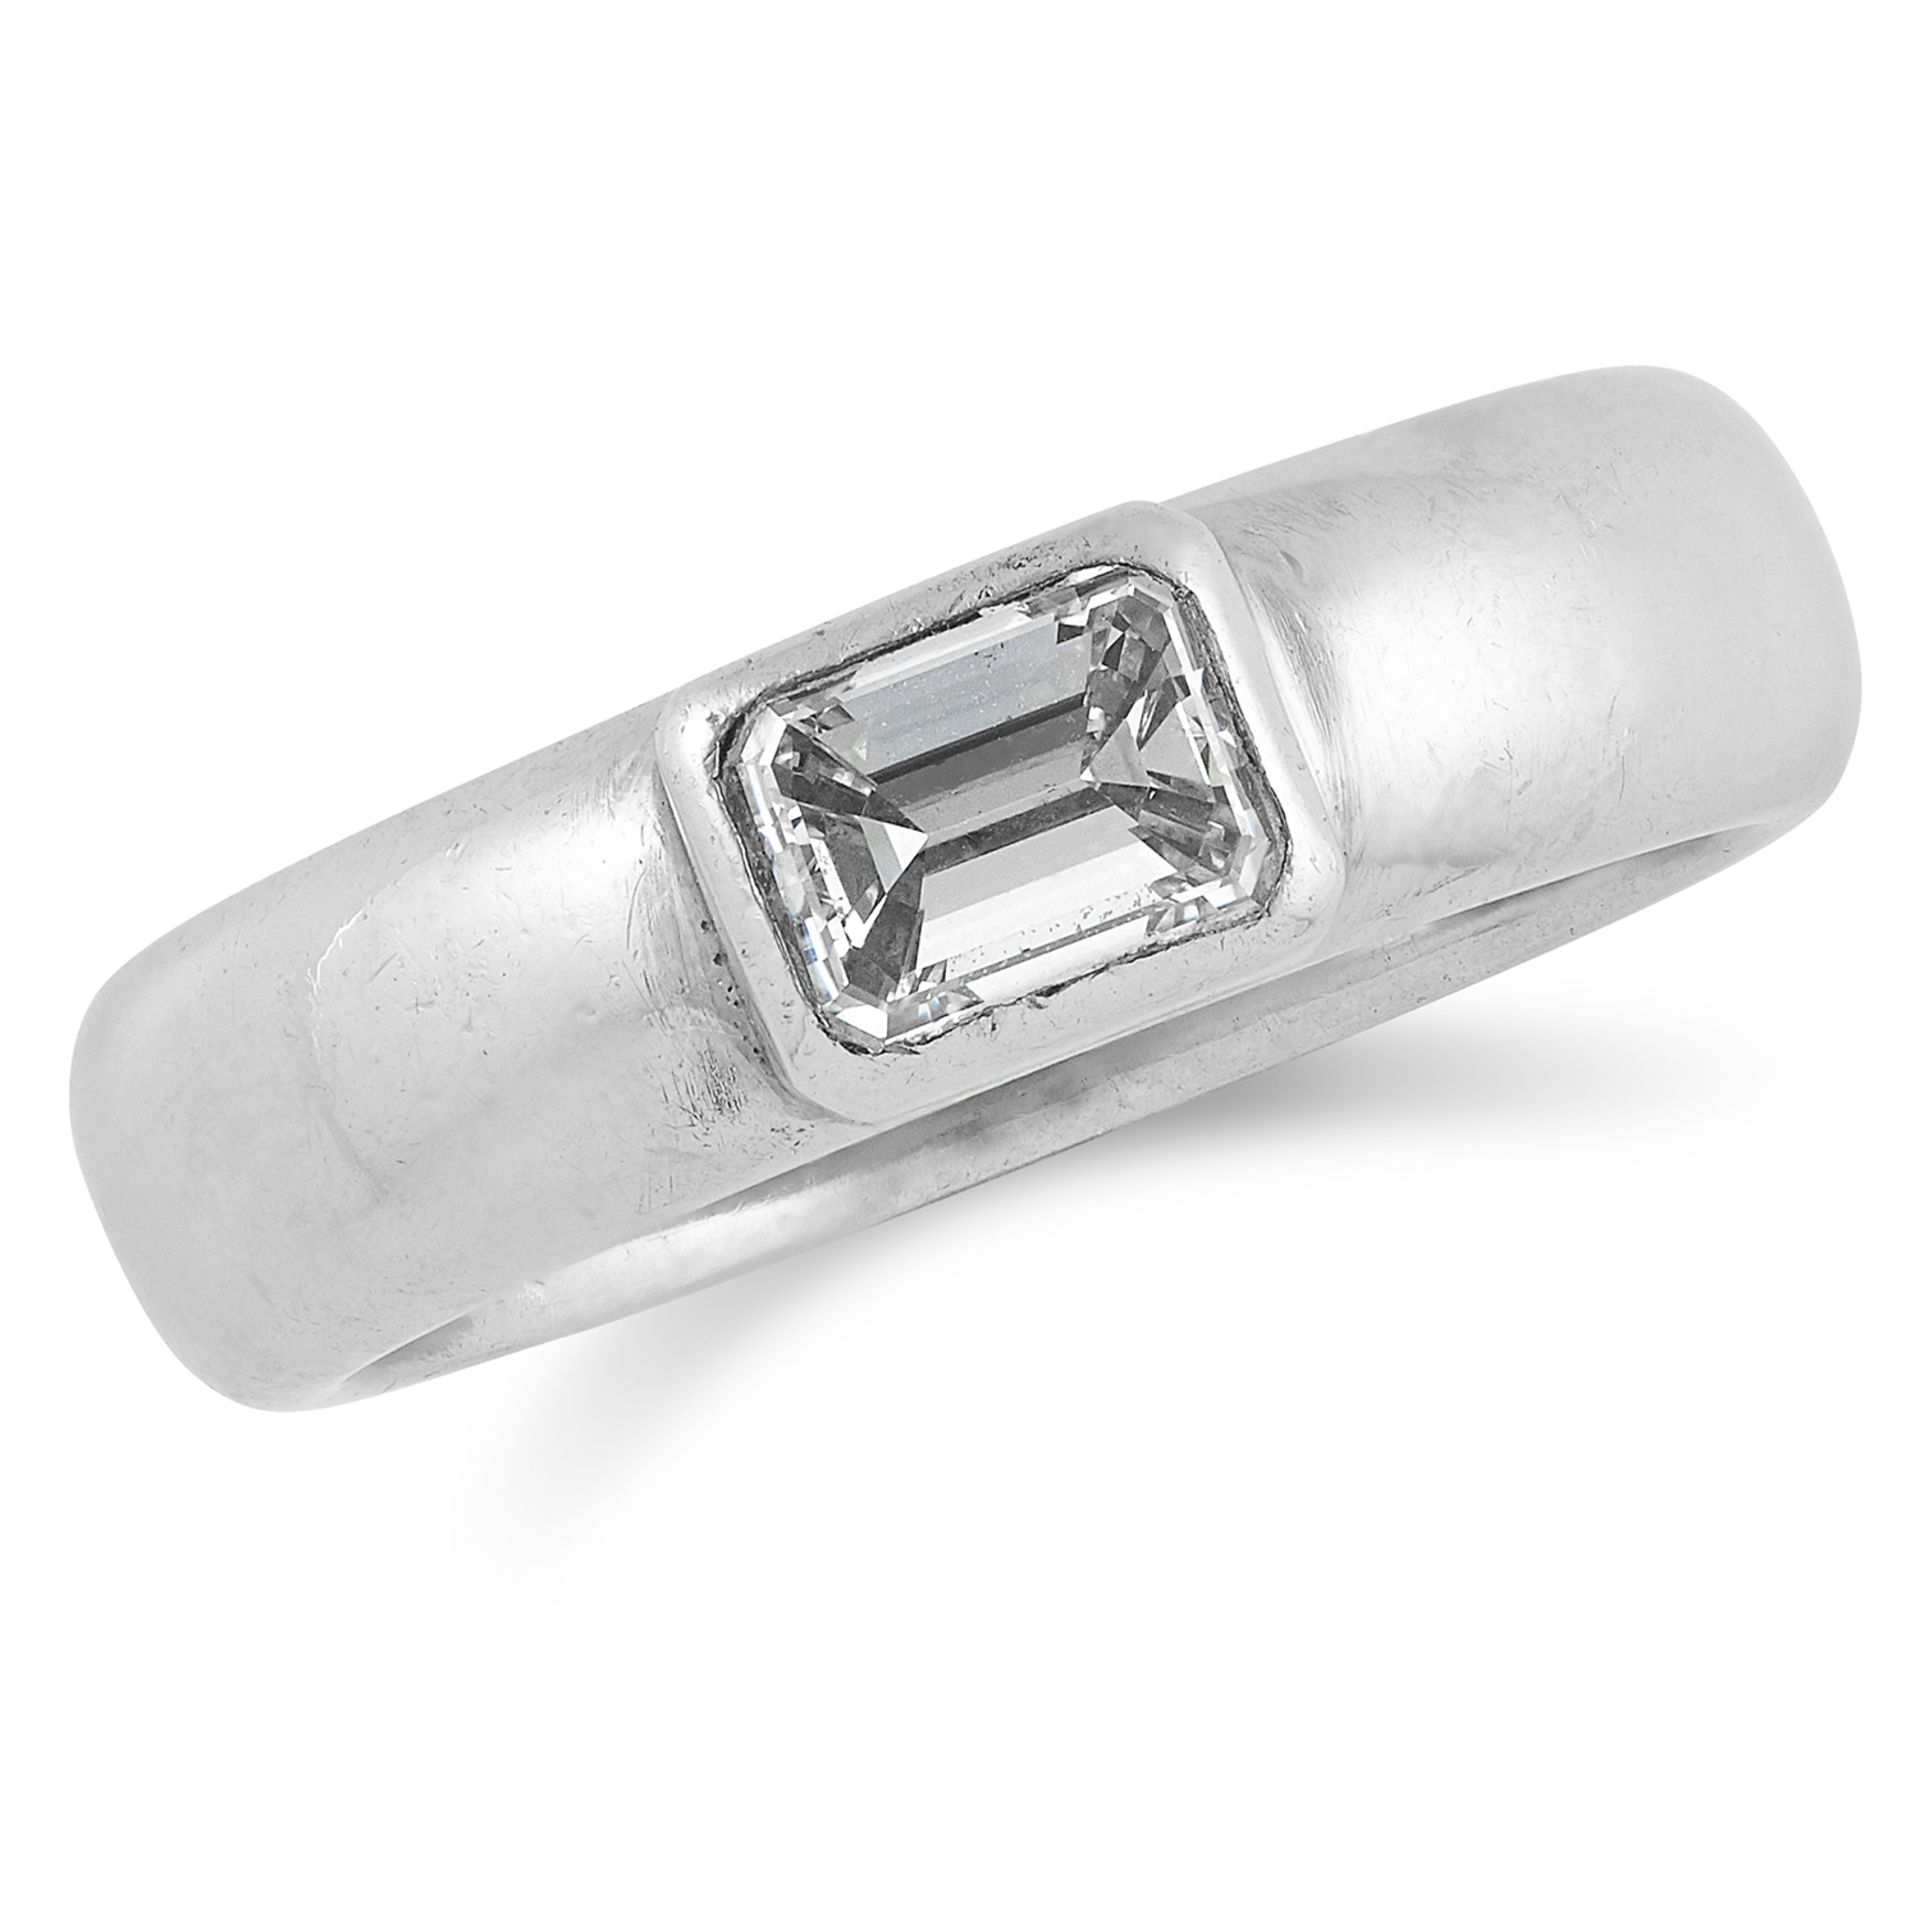 DIAMOND DRESS RING set with an emerald cut diamond, size: O / 7, 13.5g.